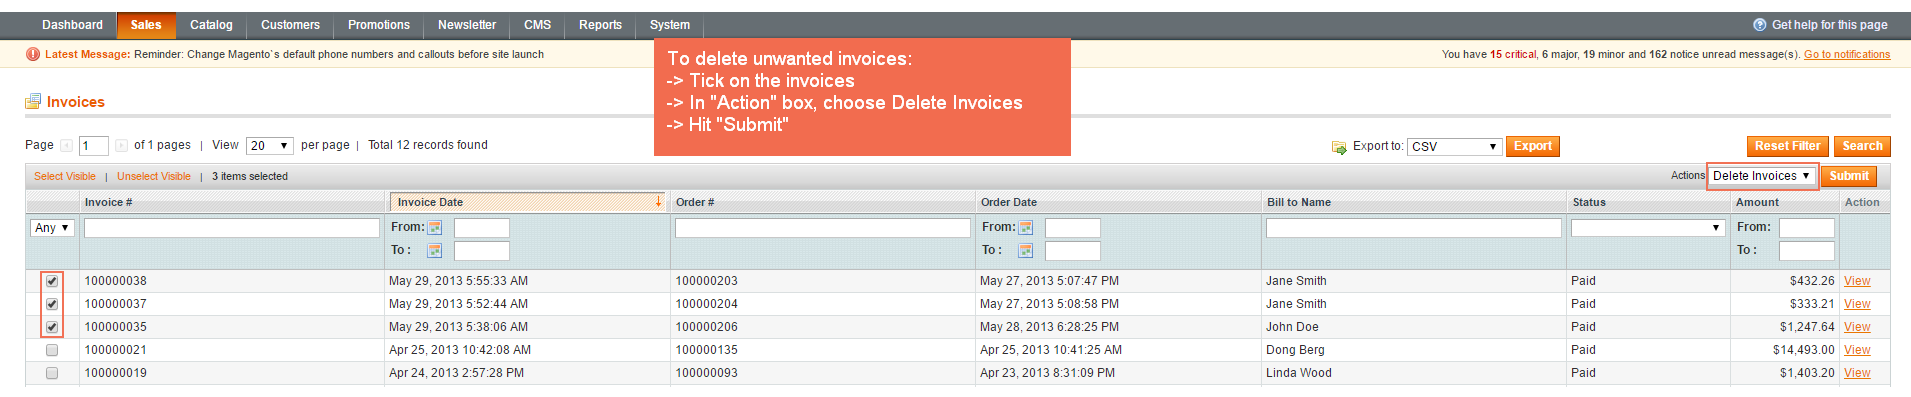 pick invoices in grid to delete